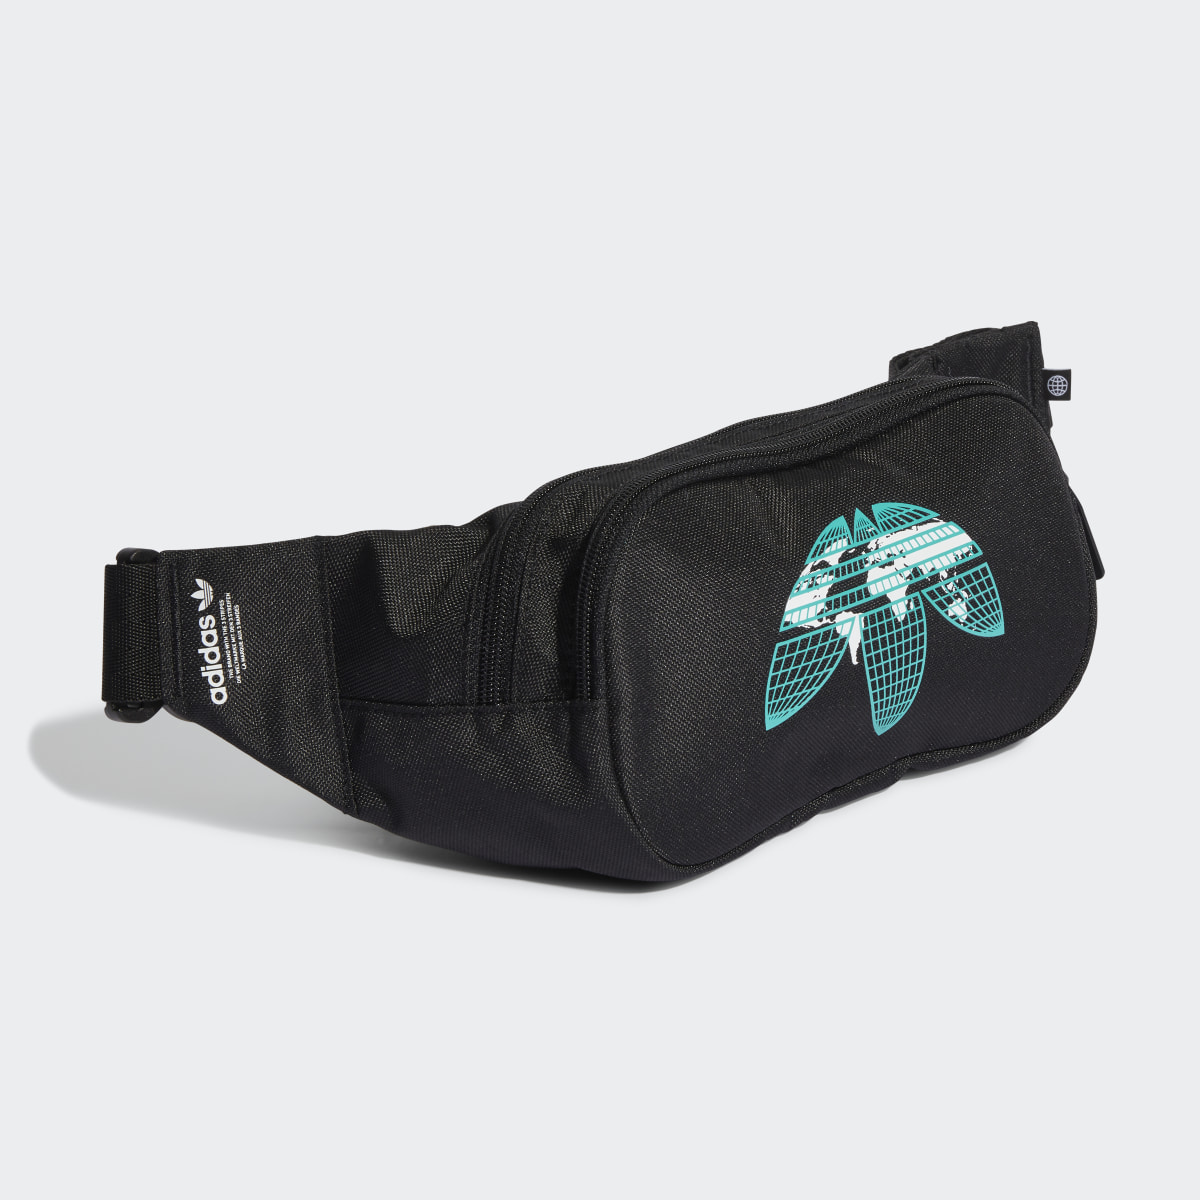 Adidas Unite Graphic Waist Bag. 4